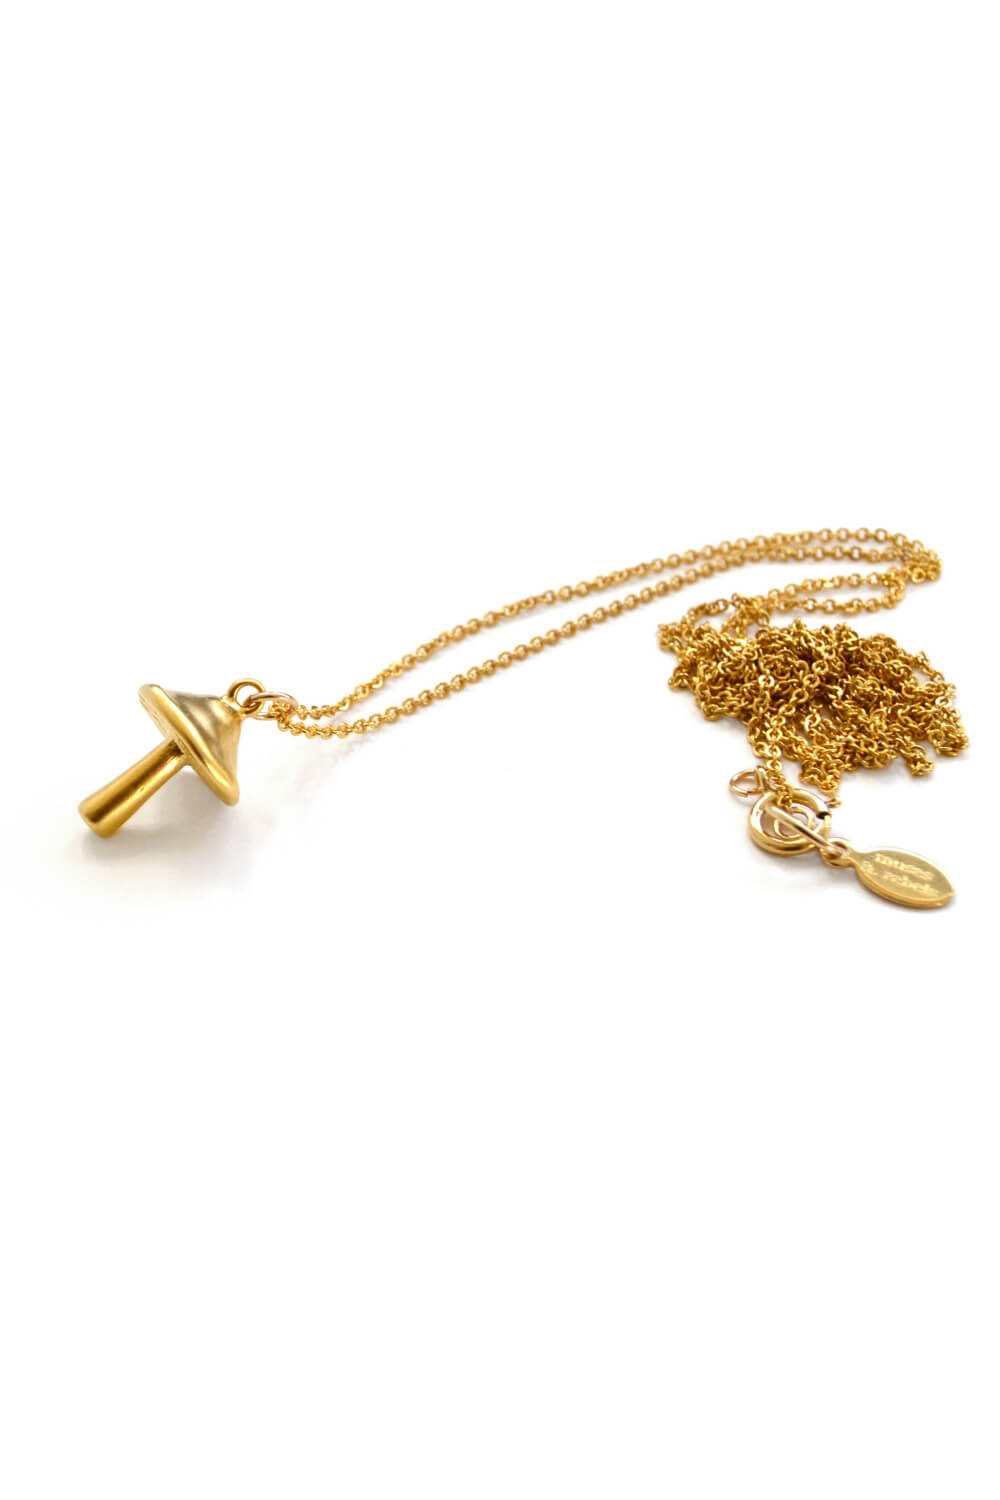 mushroom necklace - gold